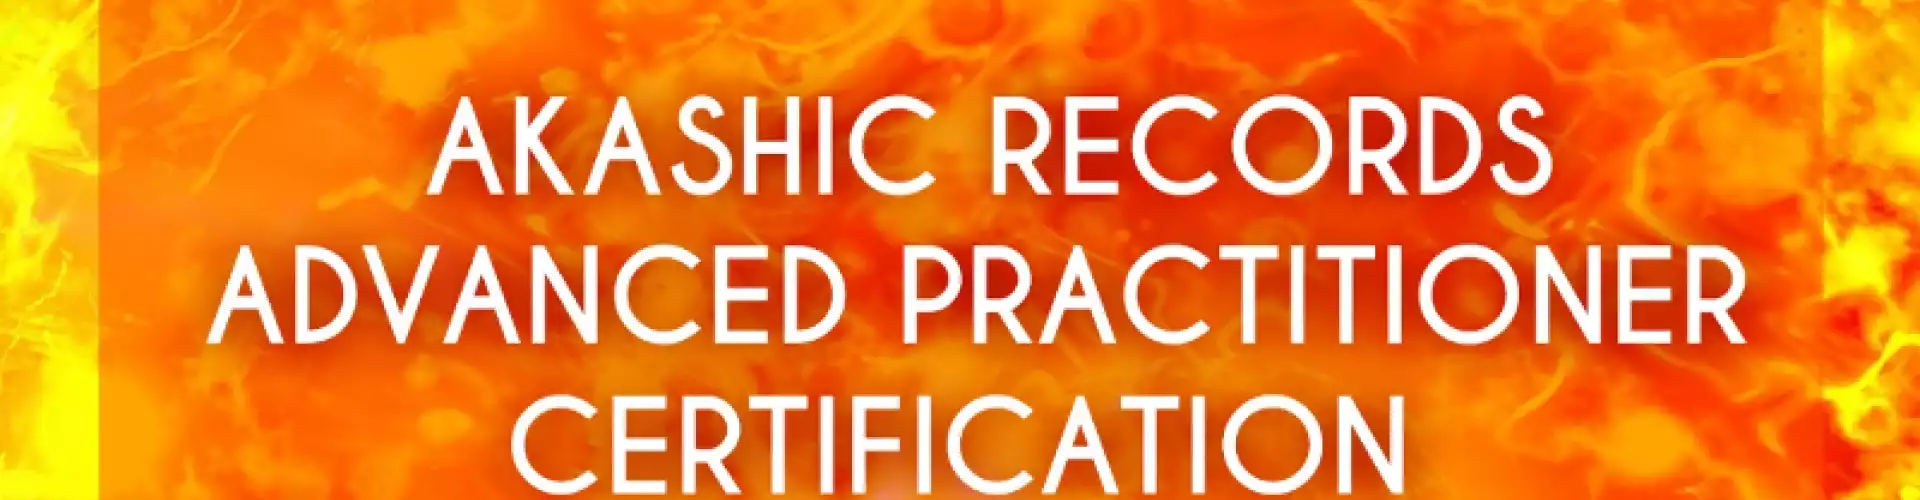 Akashic Records  Advanced Practitioner Certification - January 21-23, 2021 - Amy Mak